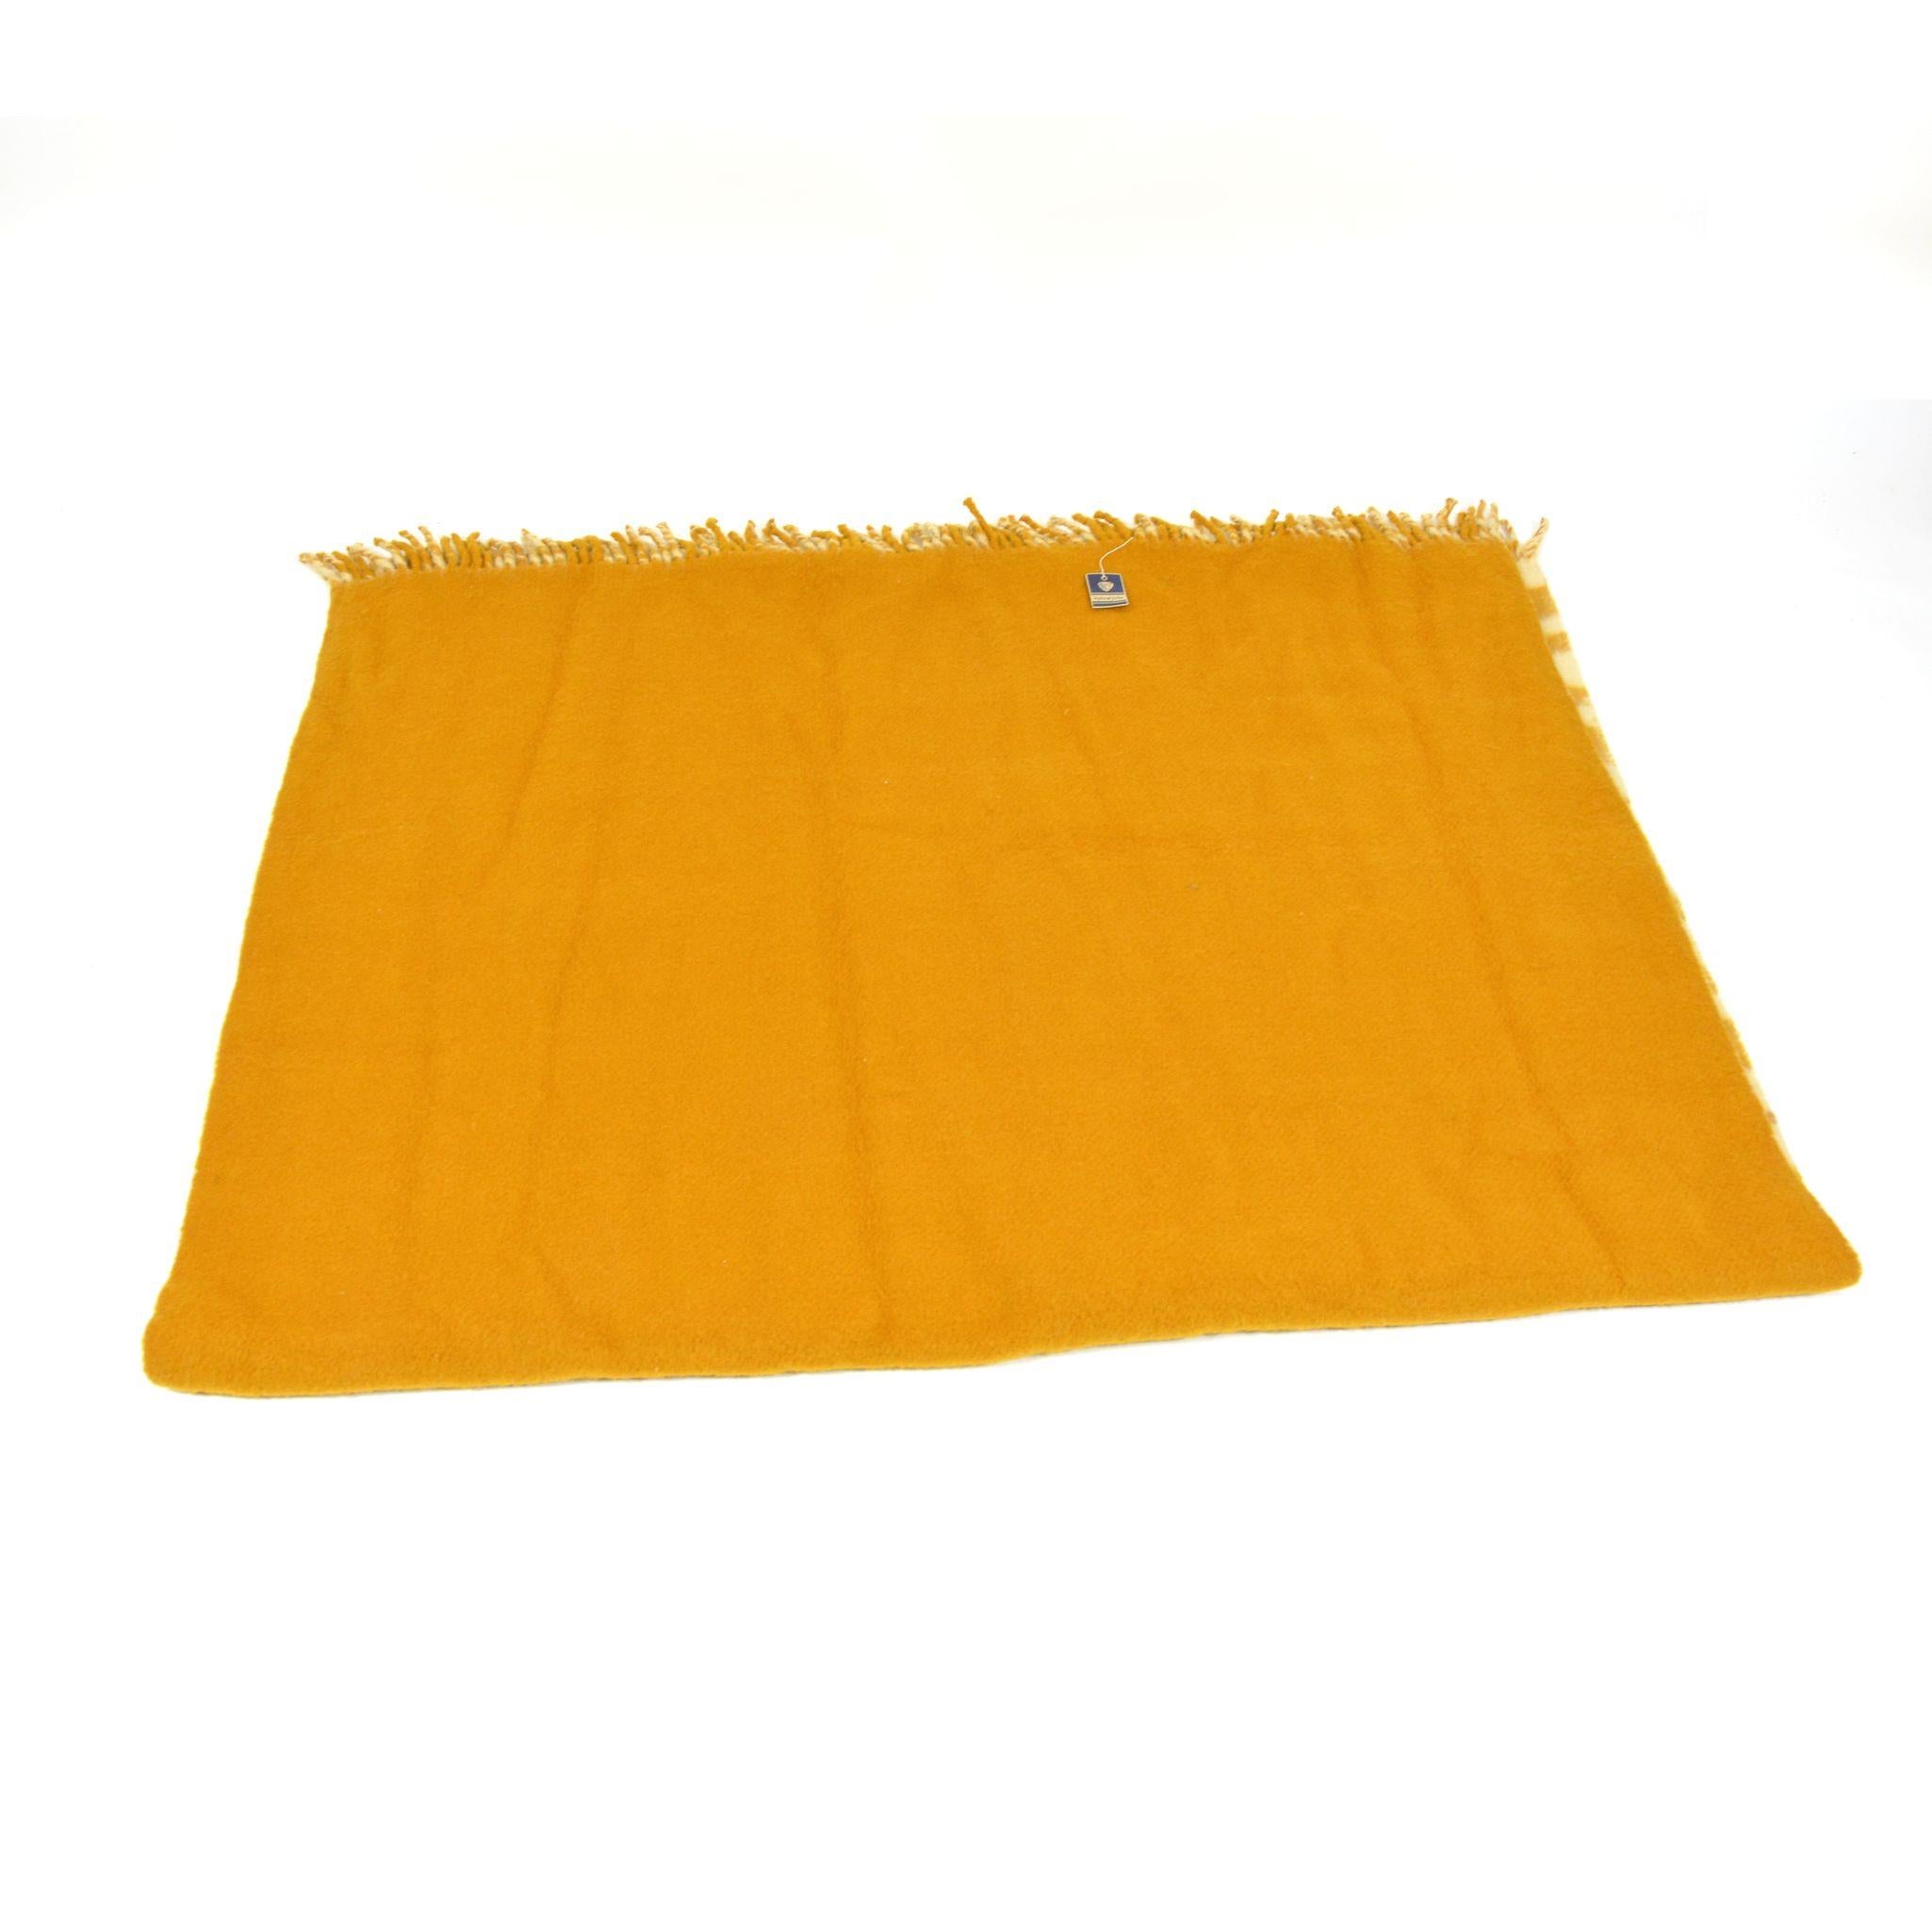 100% Wool Blanket Manufactured by Krásná Jizba, Czechoslovakia, 1970s For Sale 2